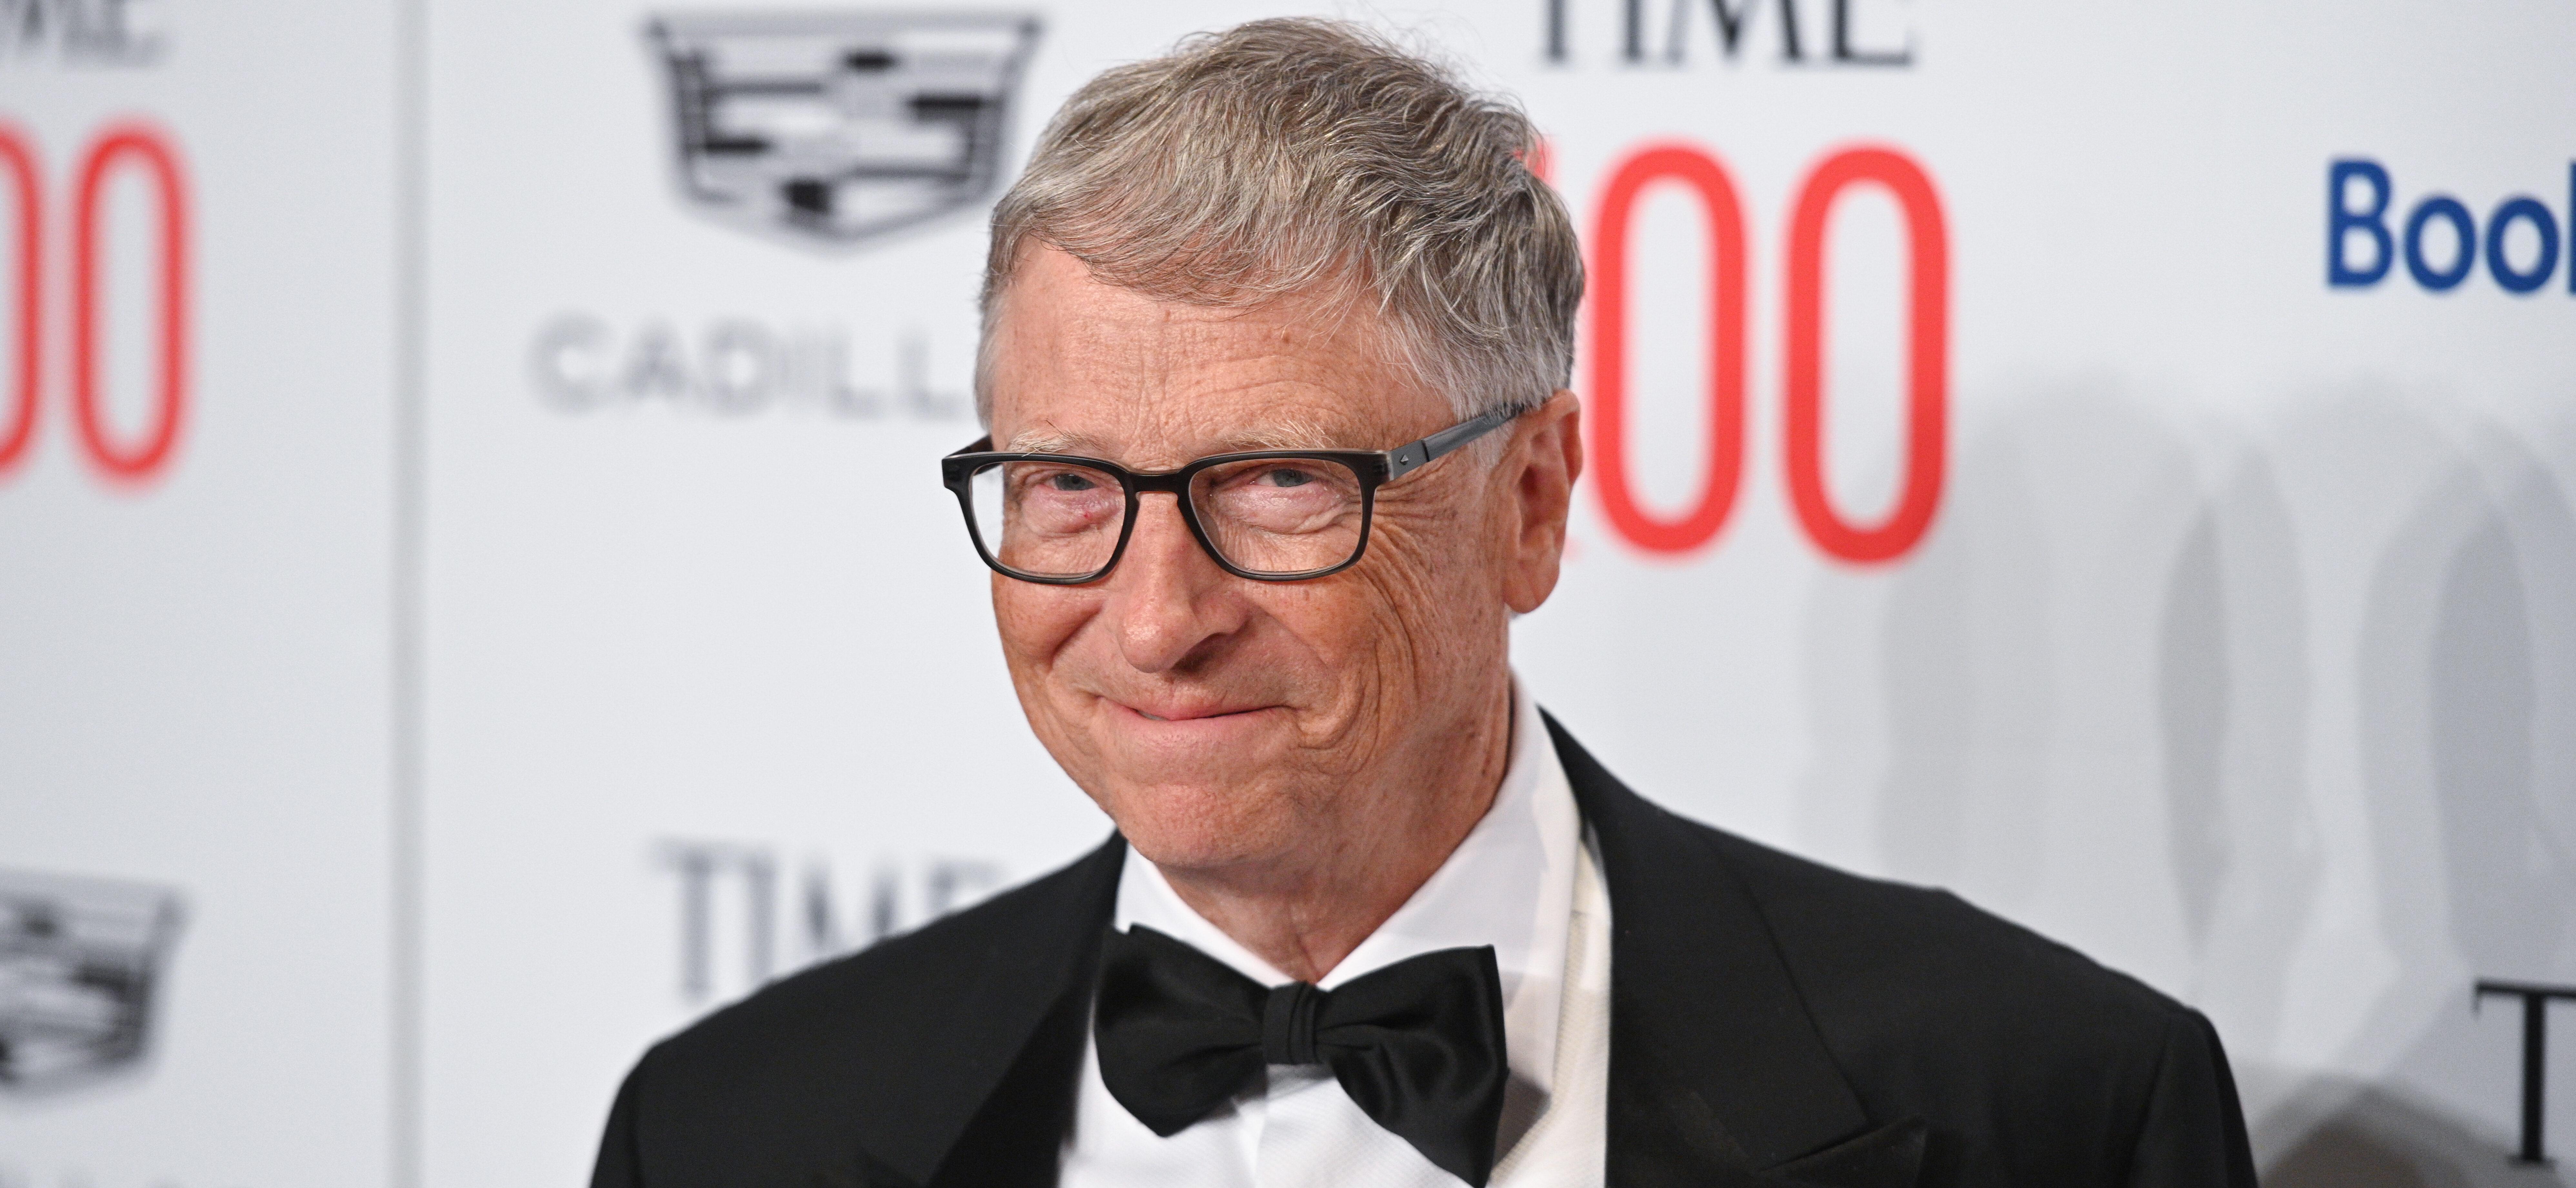 Bill Gates at TIME100 Gala 2022